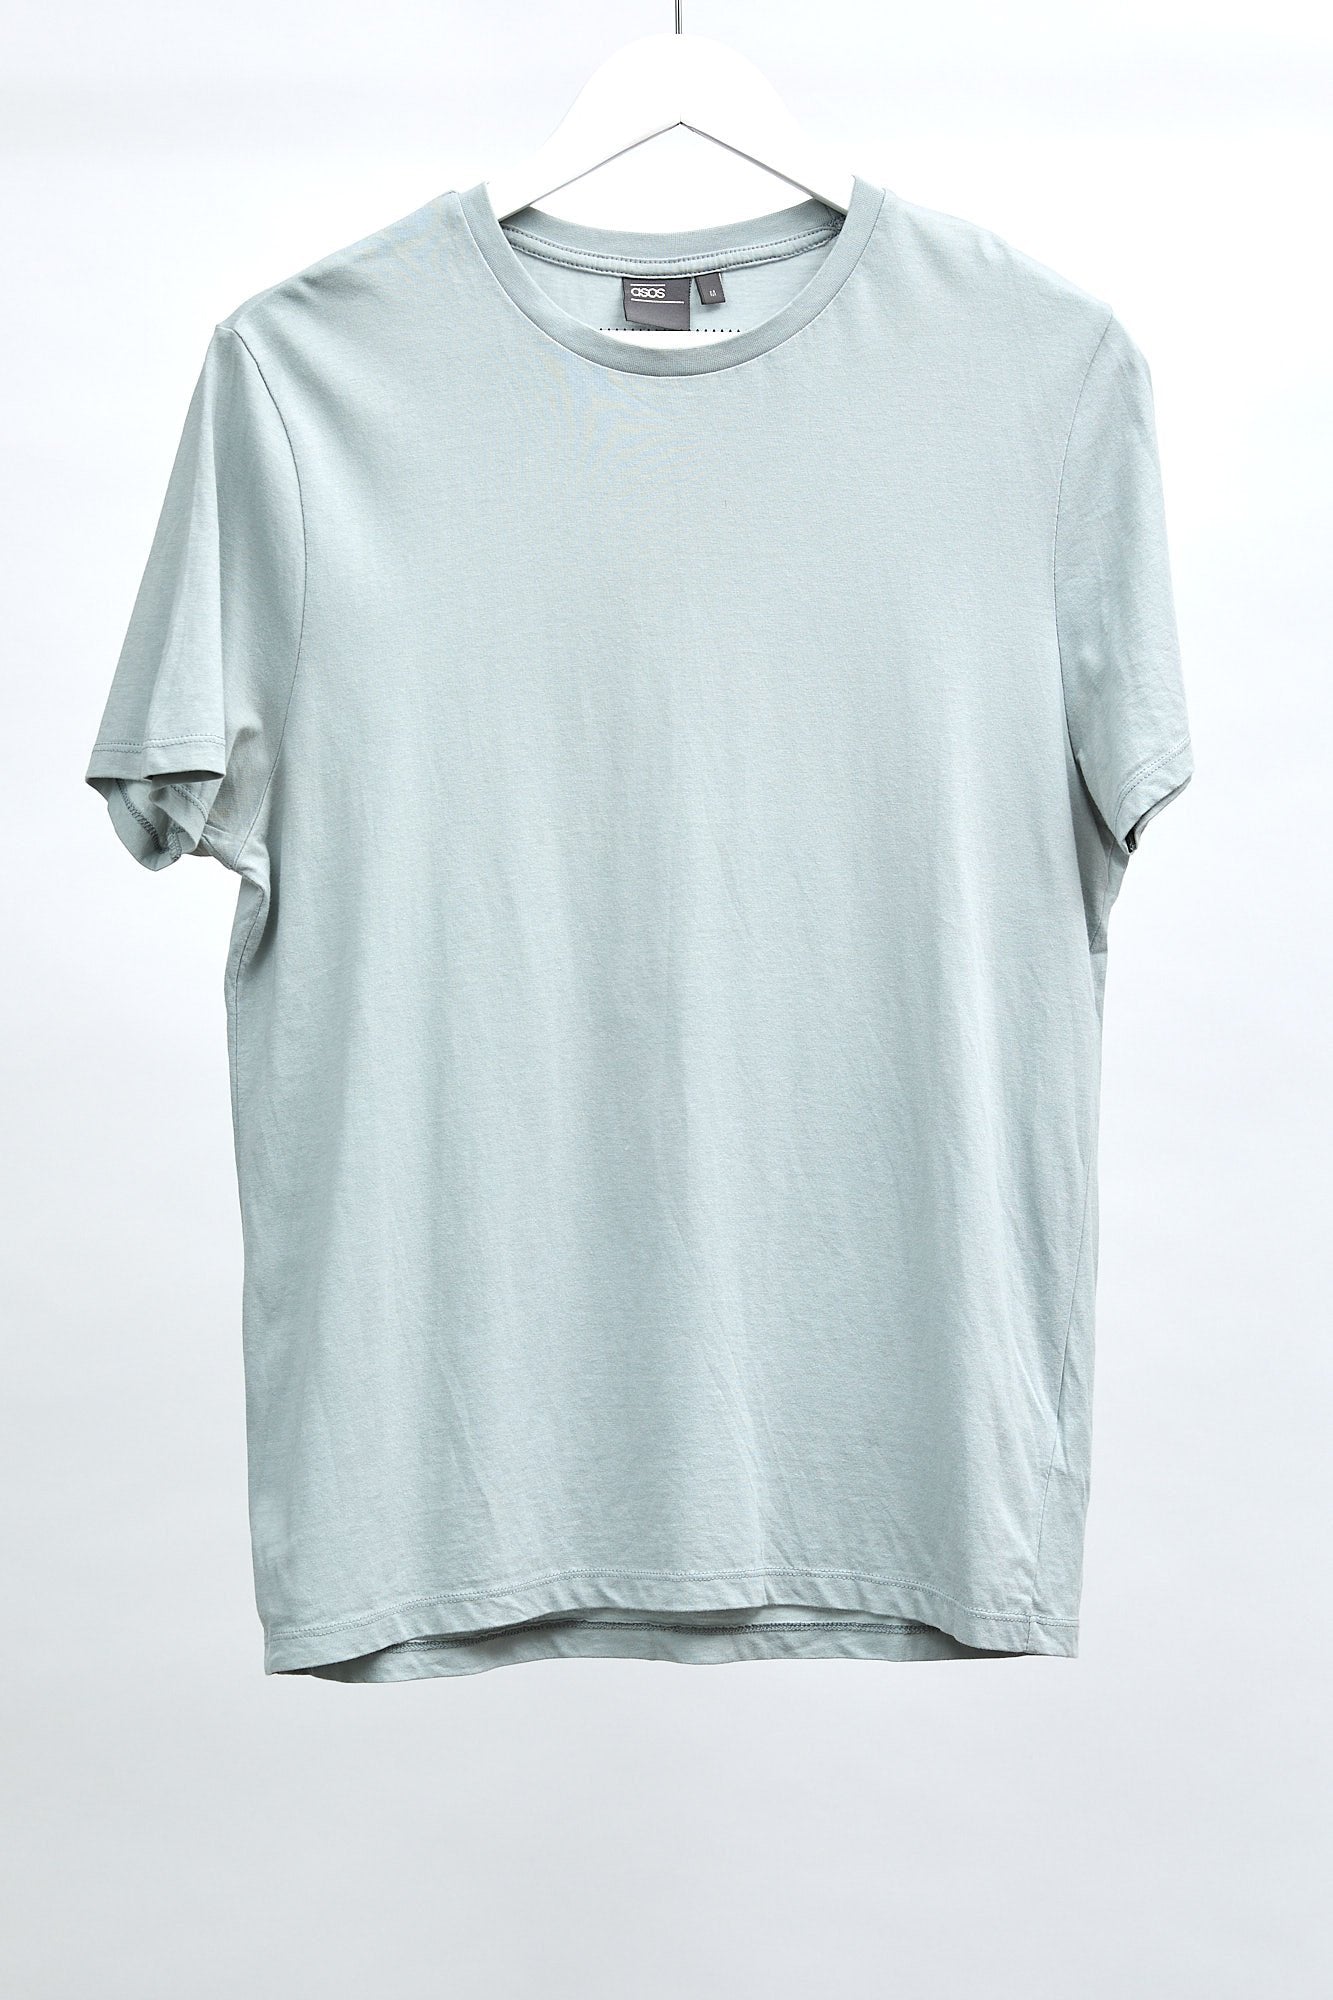 Mens Mint Green/Grey T-Shirt: Size Medium